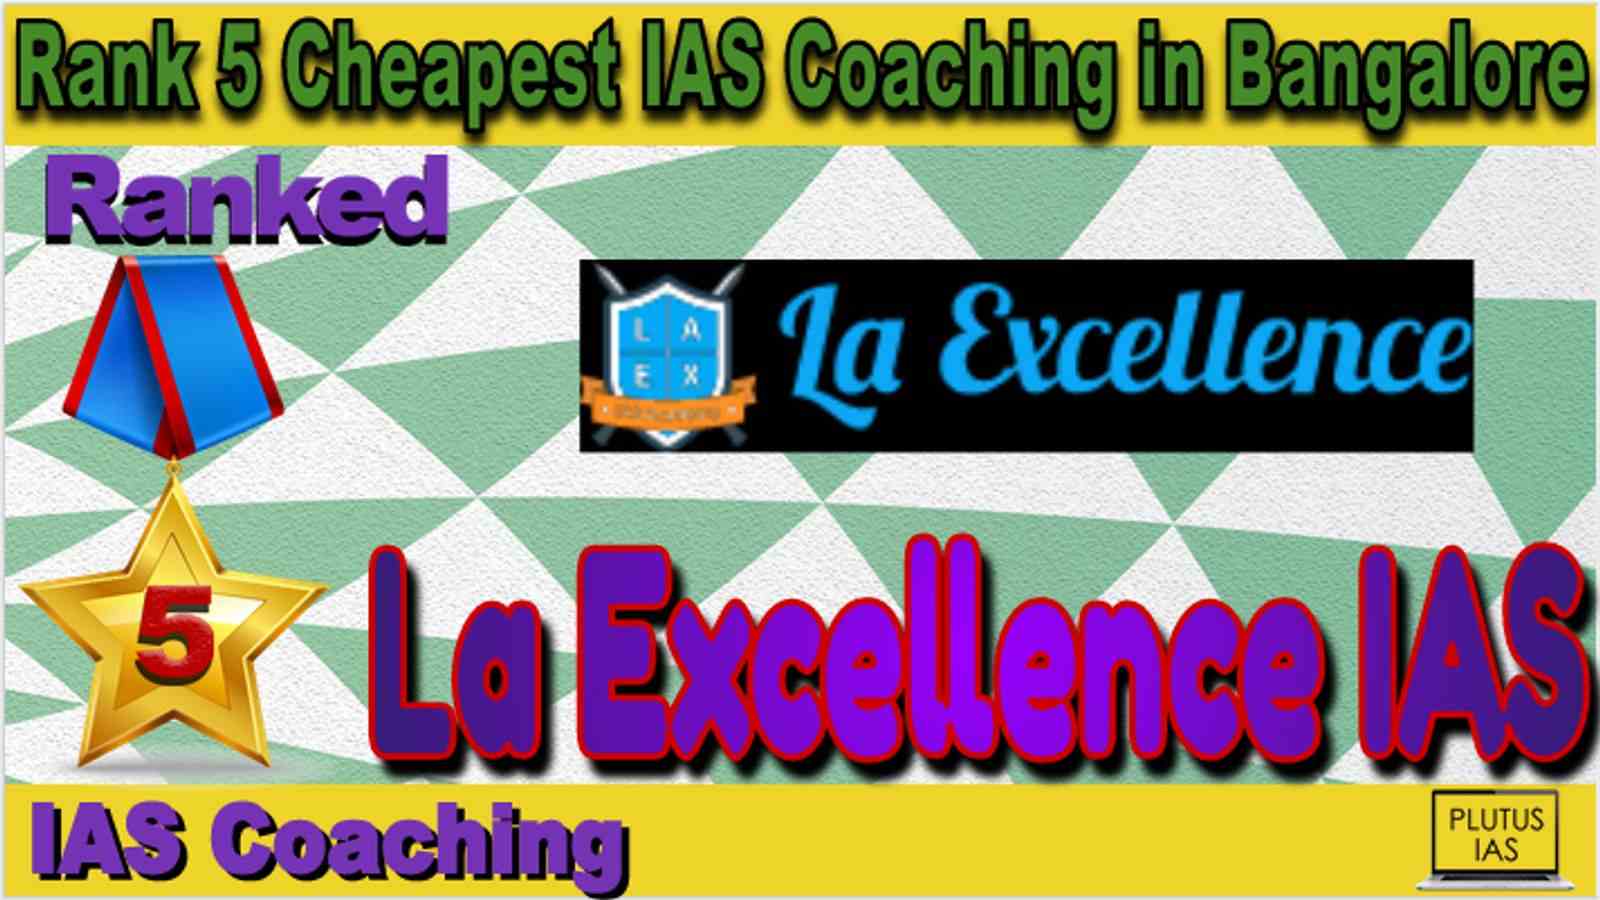 Rank 5 Cheapest IAS Coaching in Bangalore